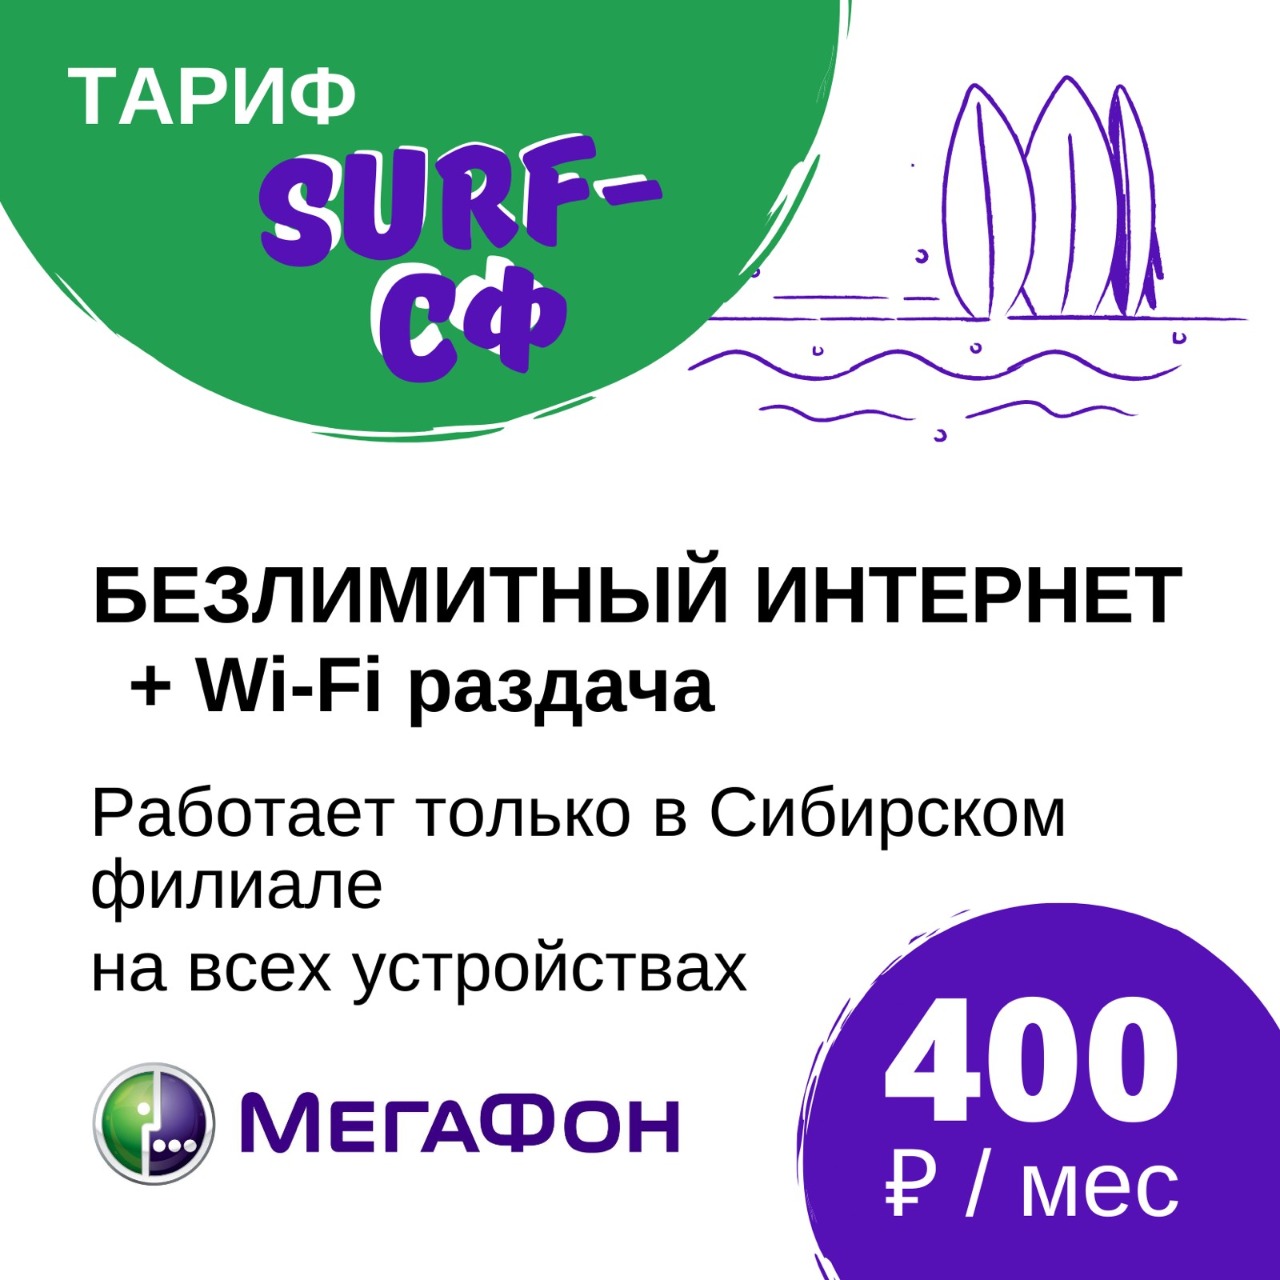 Саяногорск Инфо - whatsapp-image-2020-08-21-at-114743.jpeg, Скачано: 472